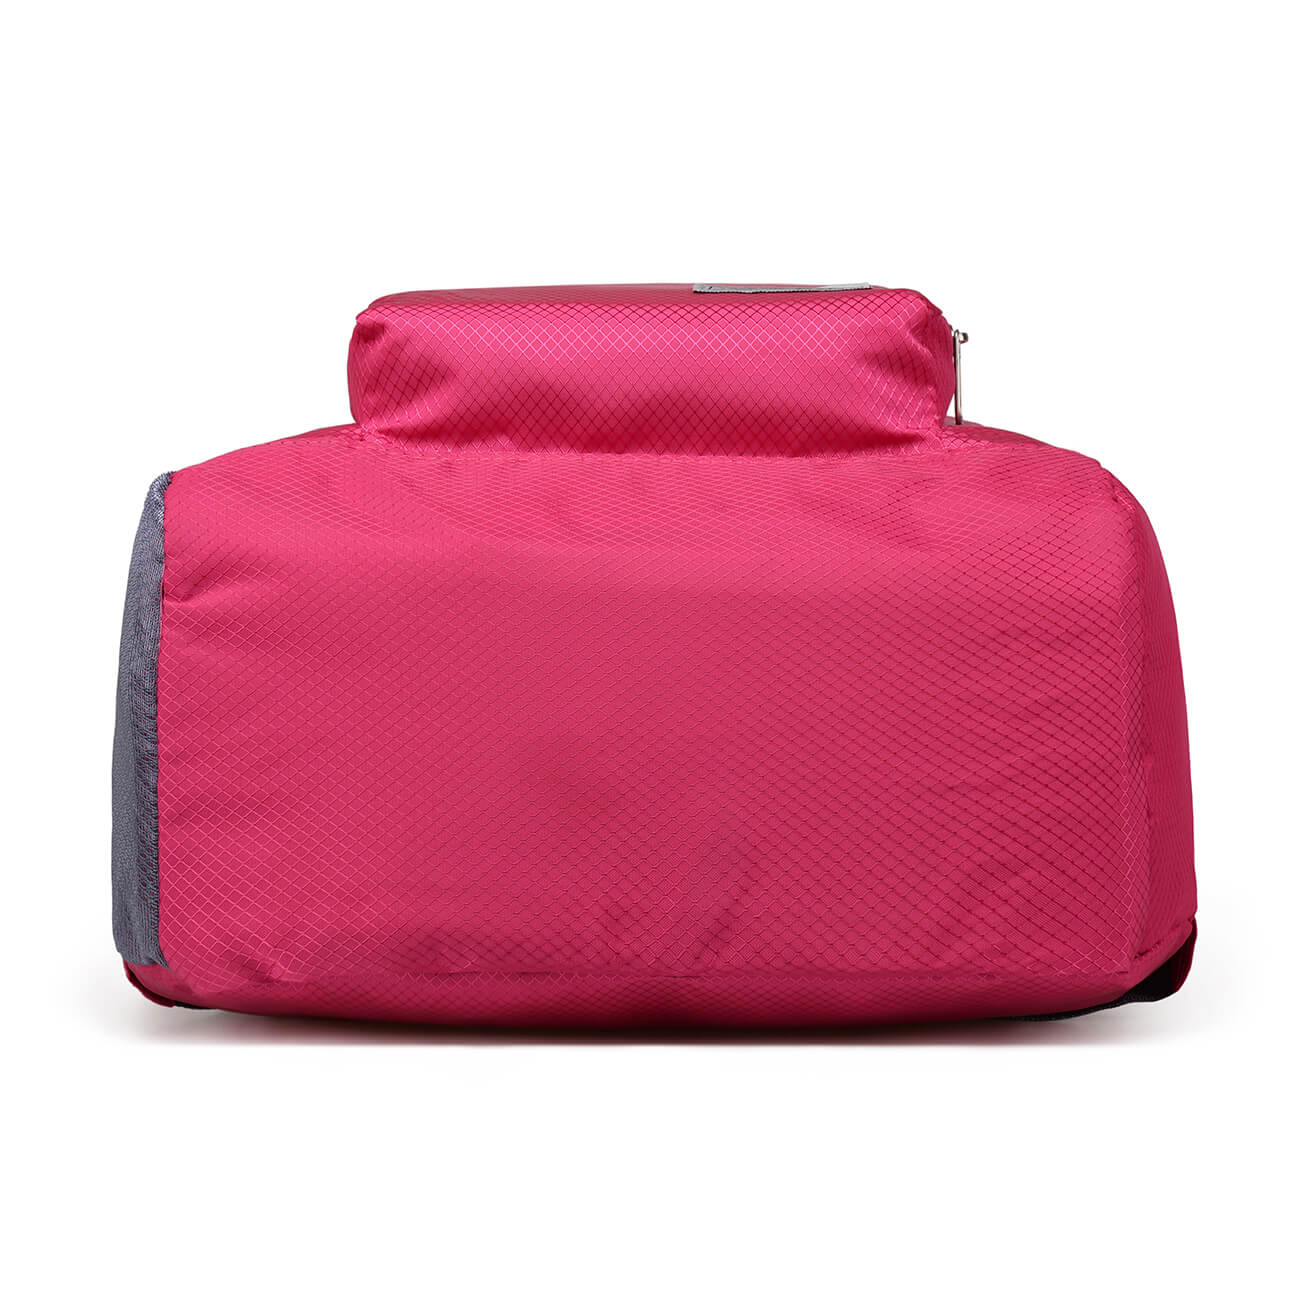 Foldable sturdy nylon backpack